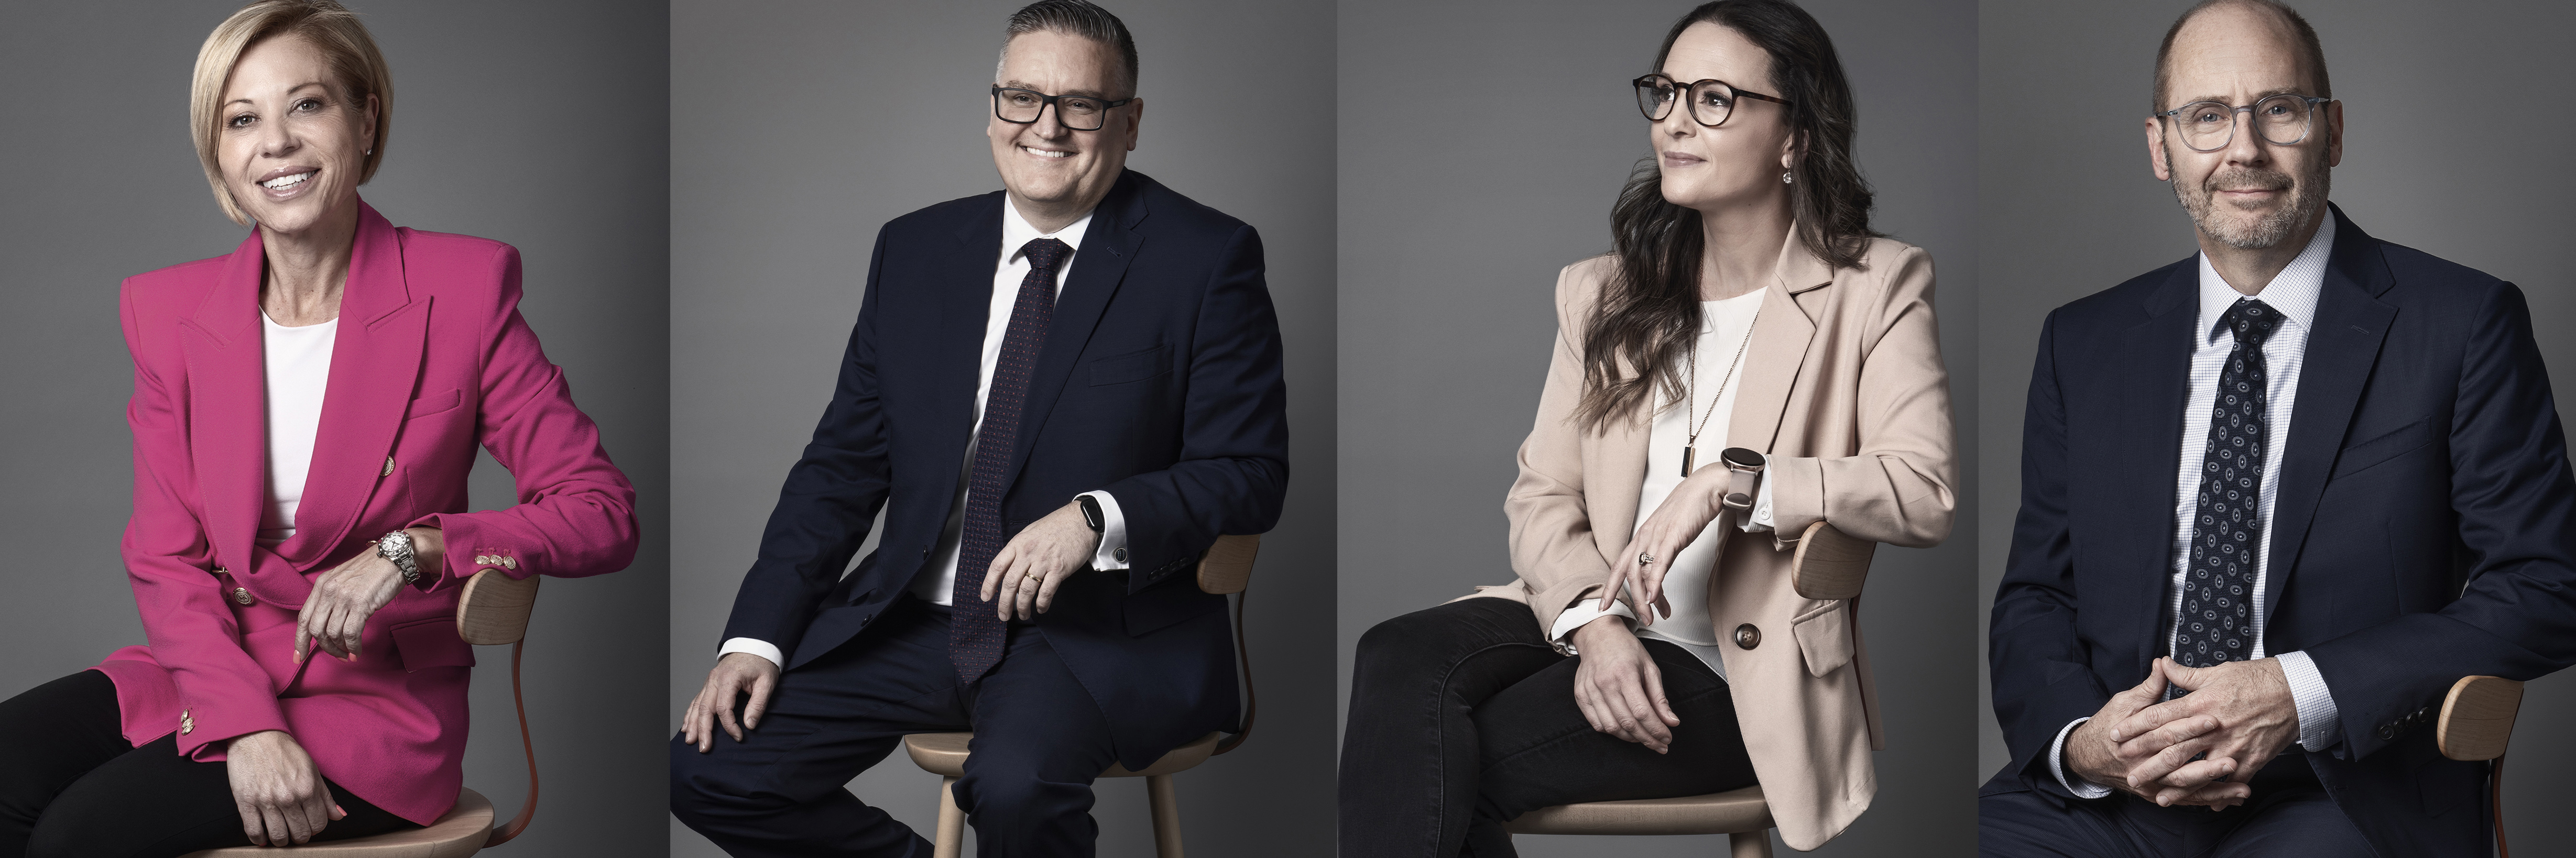 The Star Entertainment Group - Executive Portraits